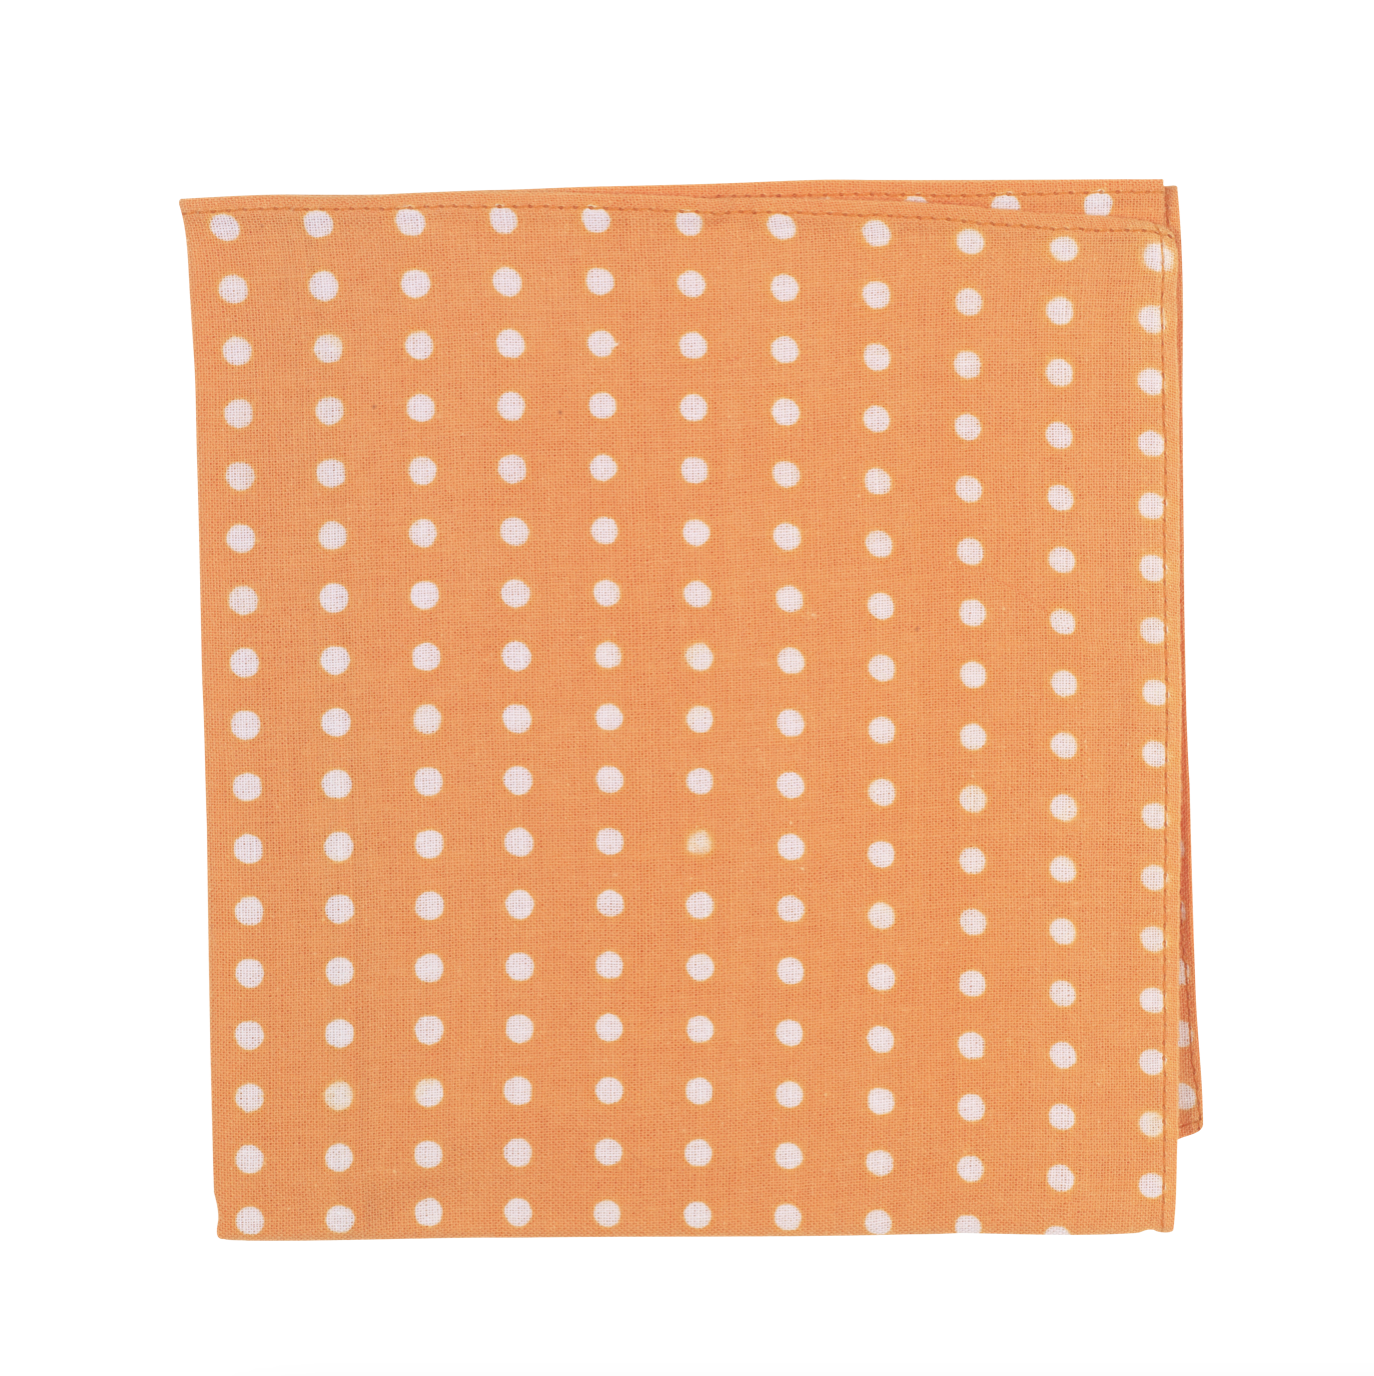 Niwaki Tangerine Print Japanese Handkerchief